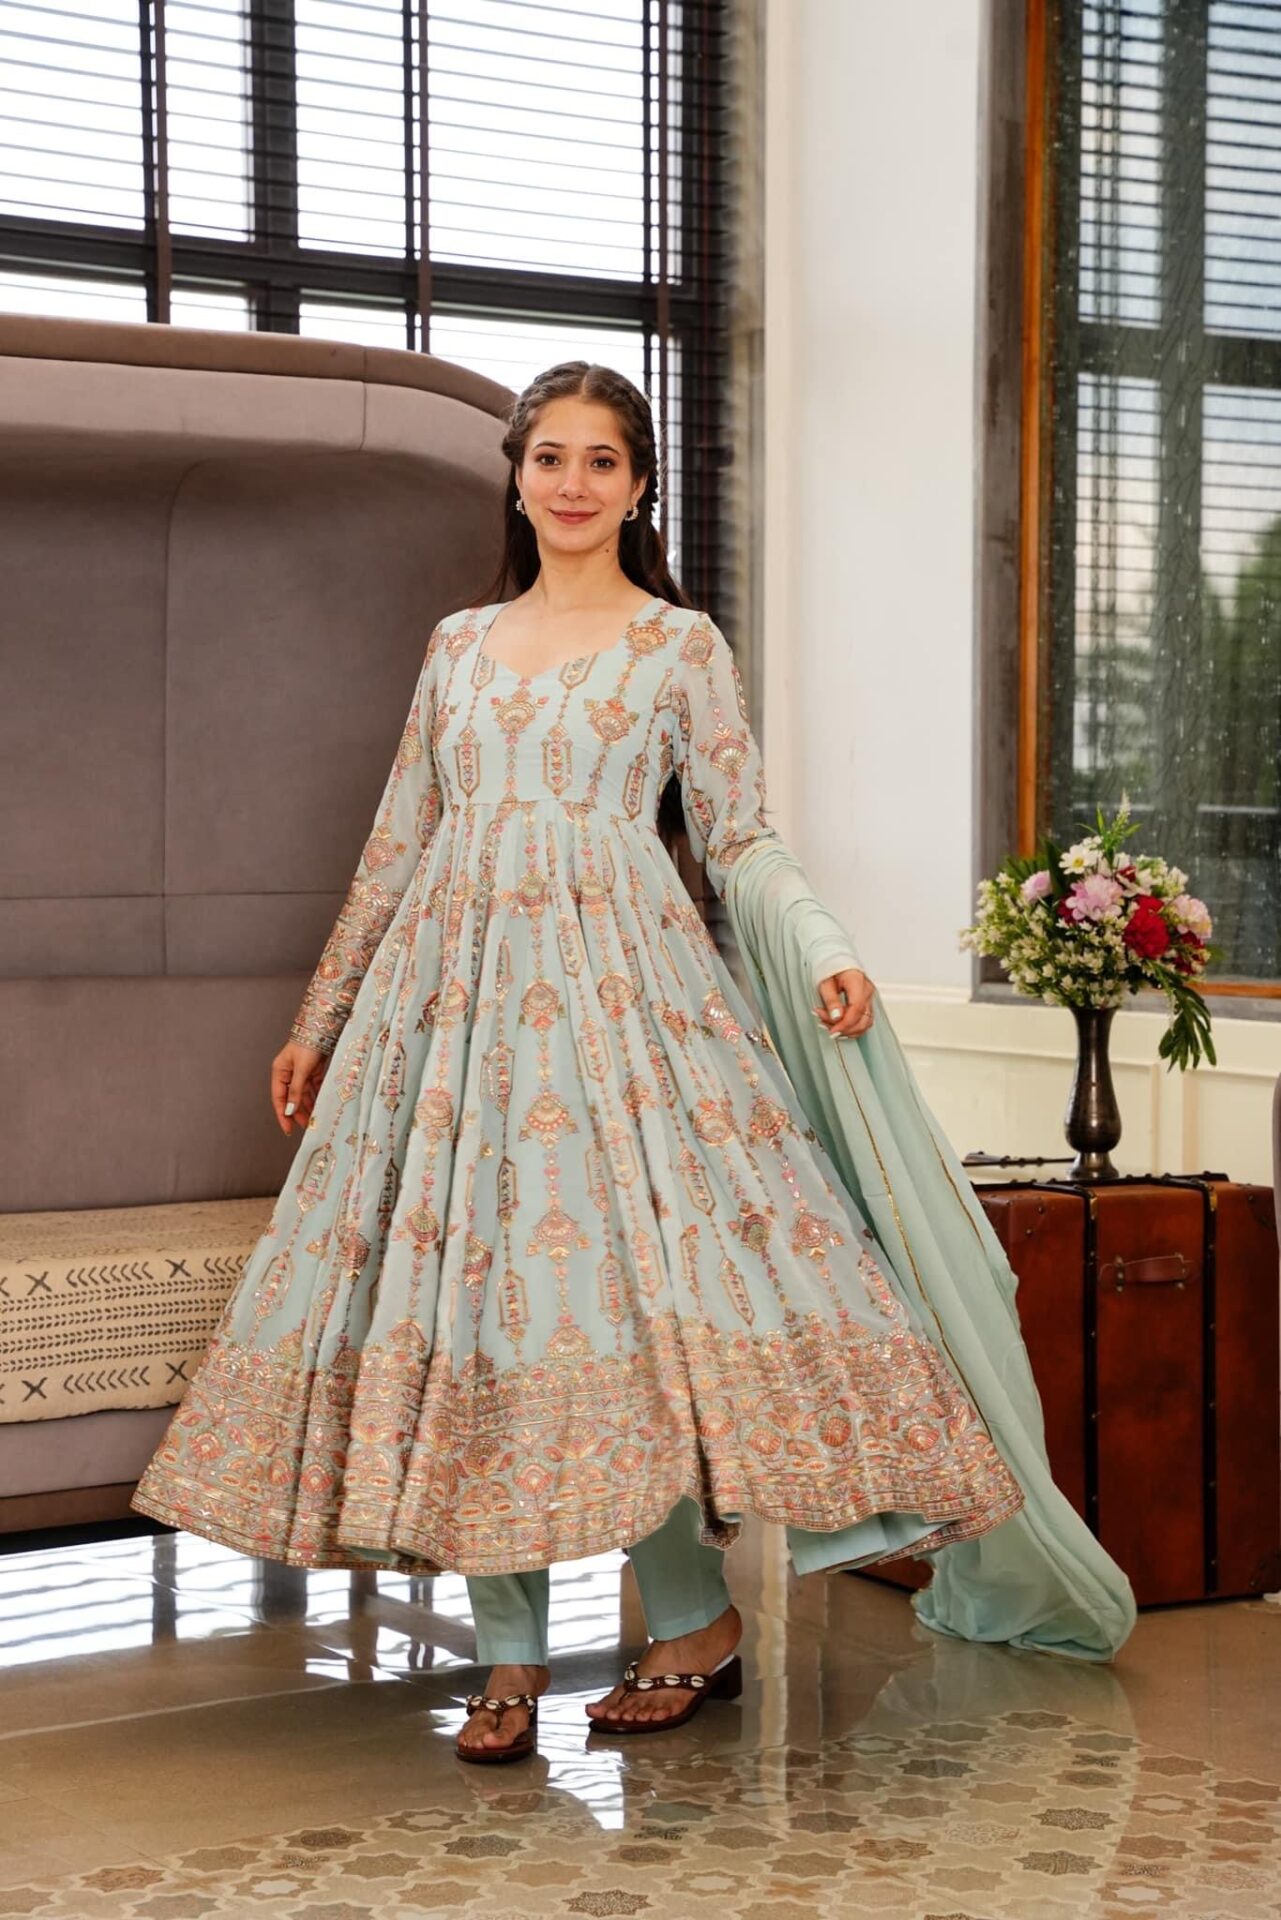 Raksha Bandhan Traditional Dresses Inspiration For Women – The Loom Blog